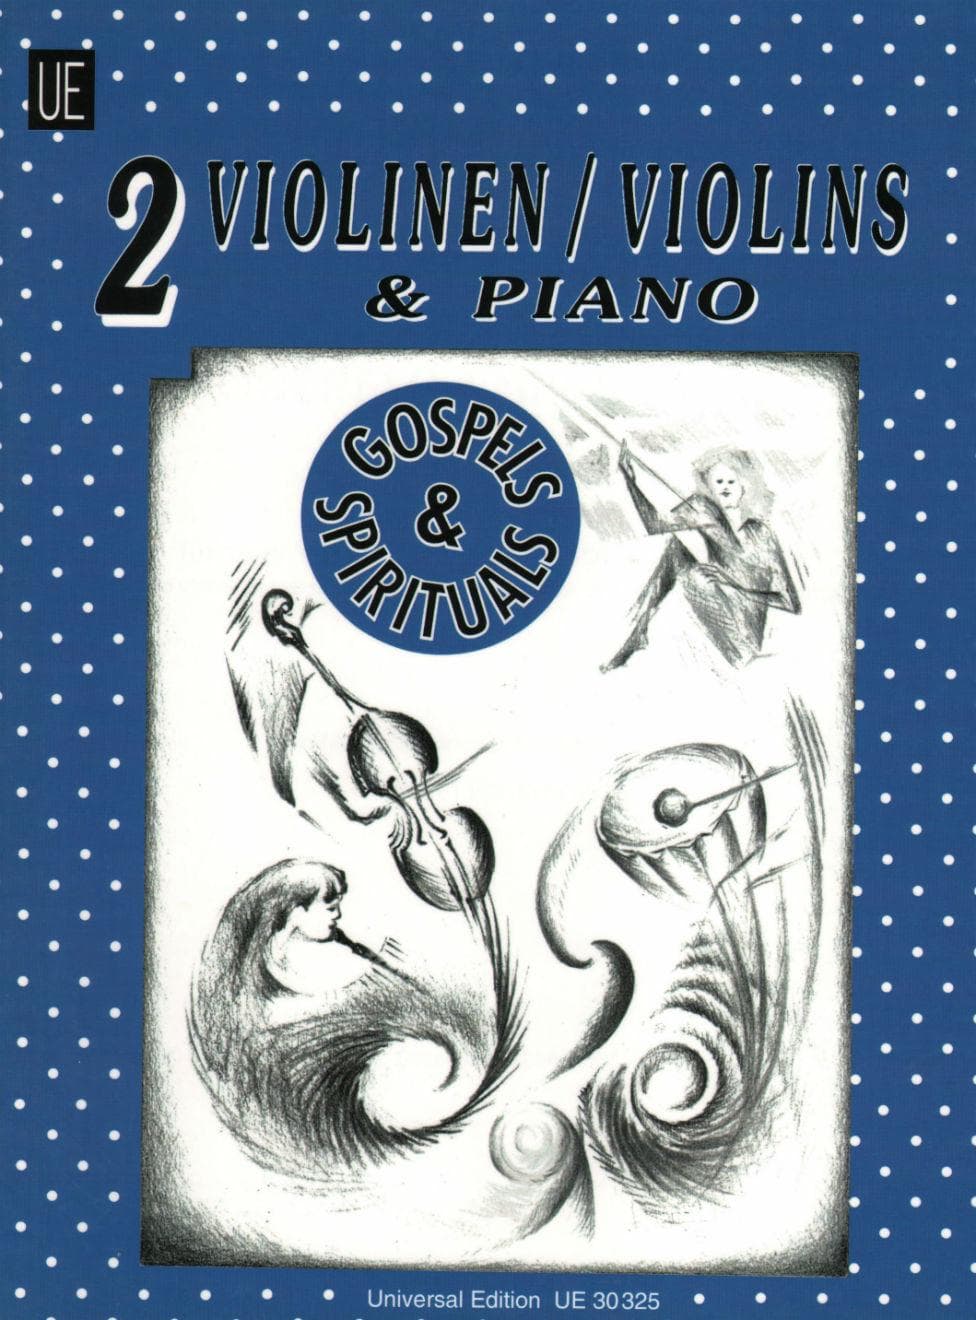 Radanovics, Michael - Gospels and Spirituals - Two Violins and Piano - Universal Edition